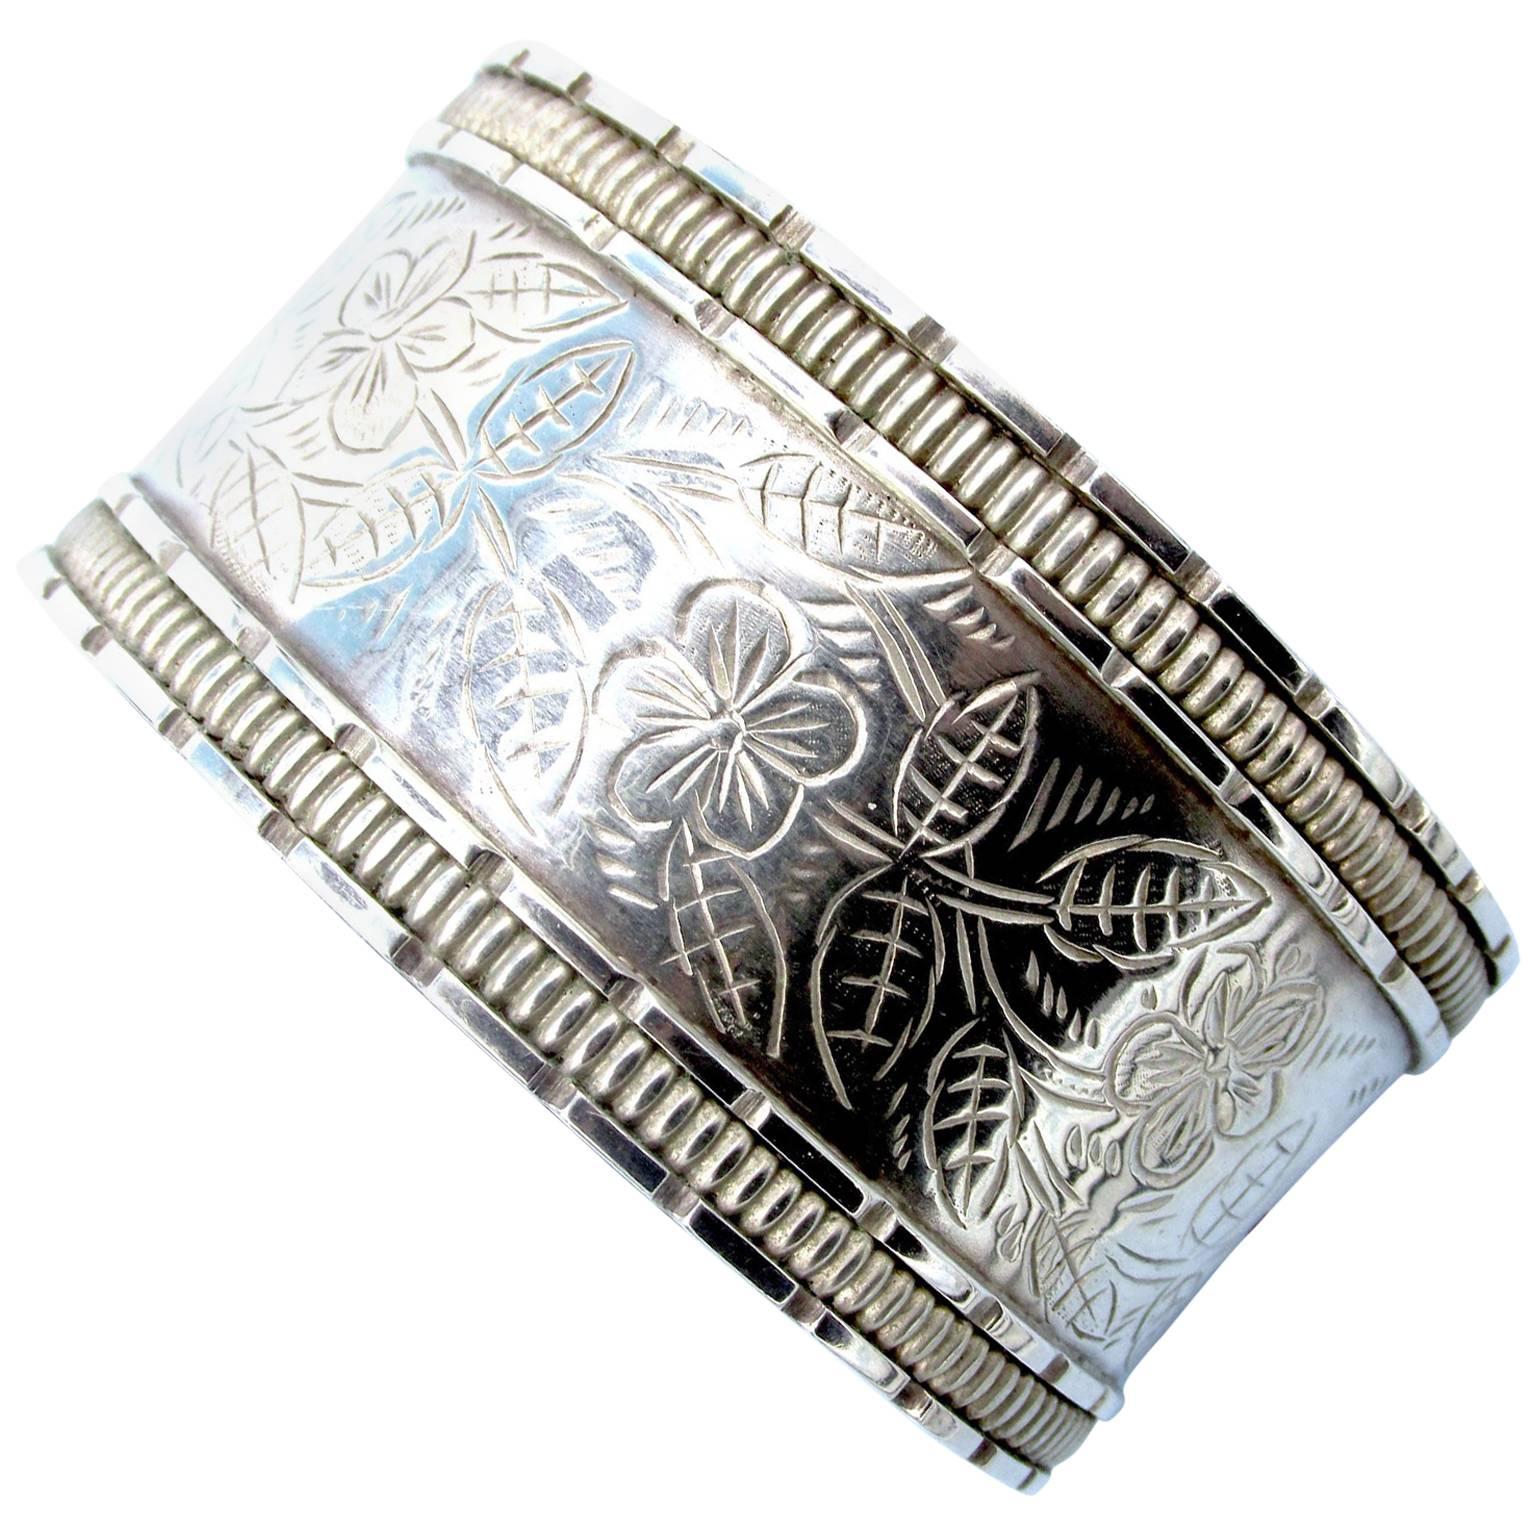 Antique Silver Bangle Bracelet